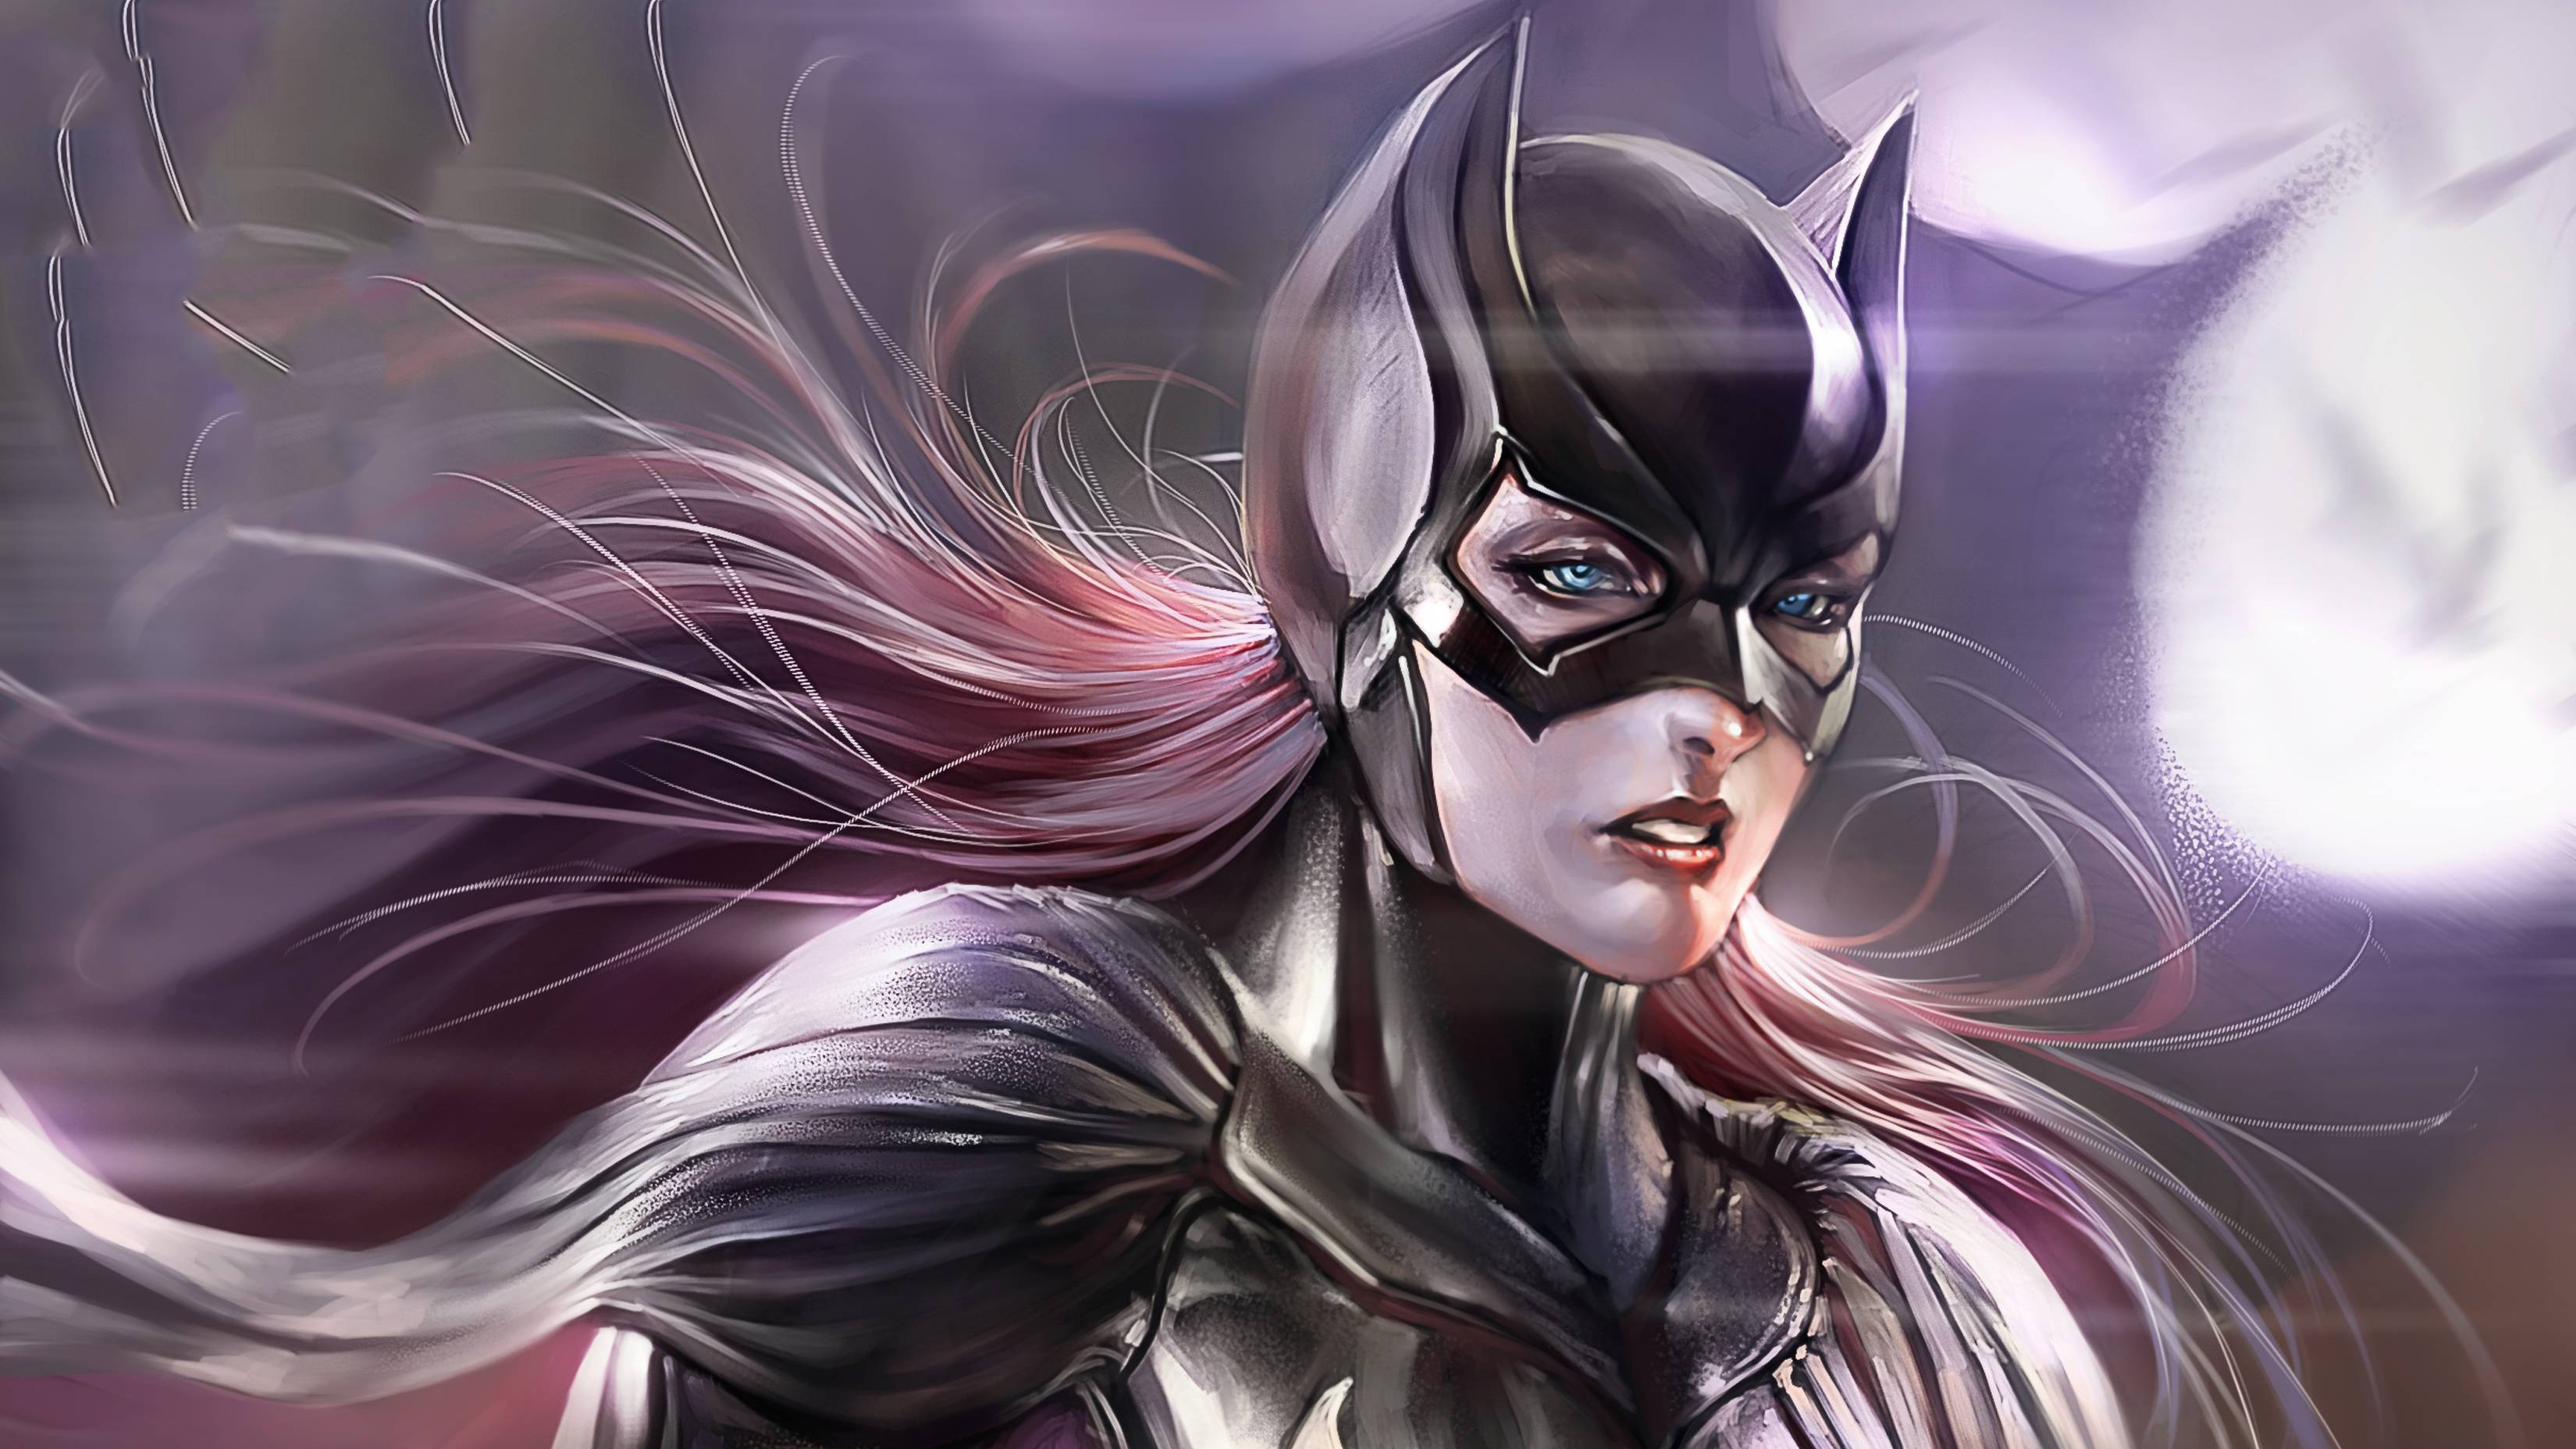 Batwoman New Digital Art, HD Superheroes, 4k Wallpaper